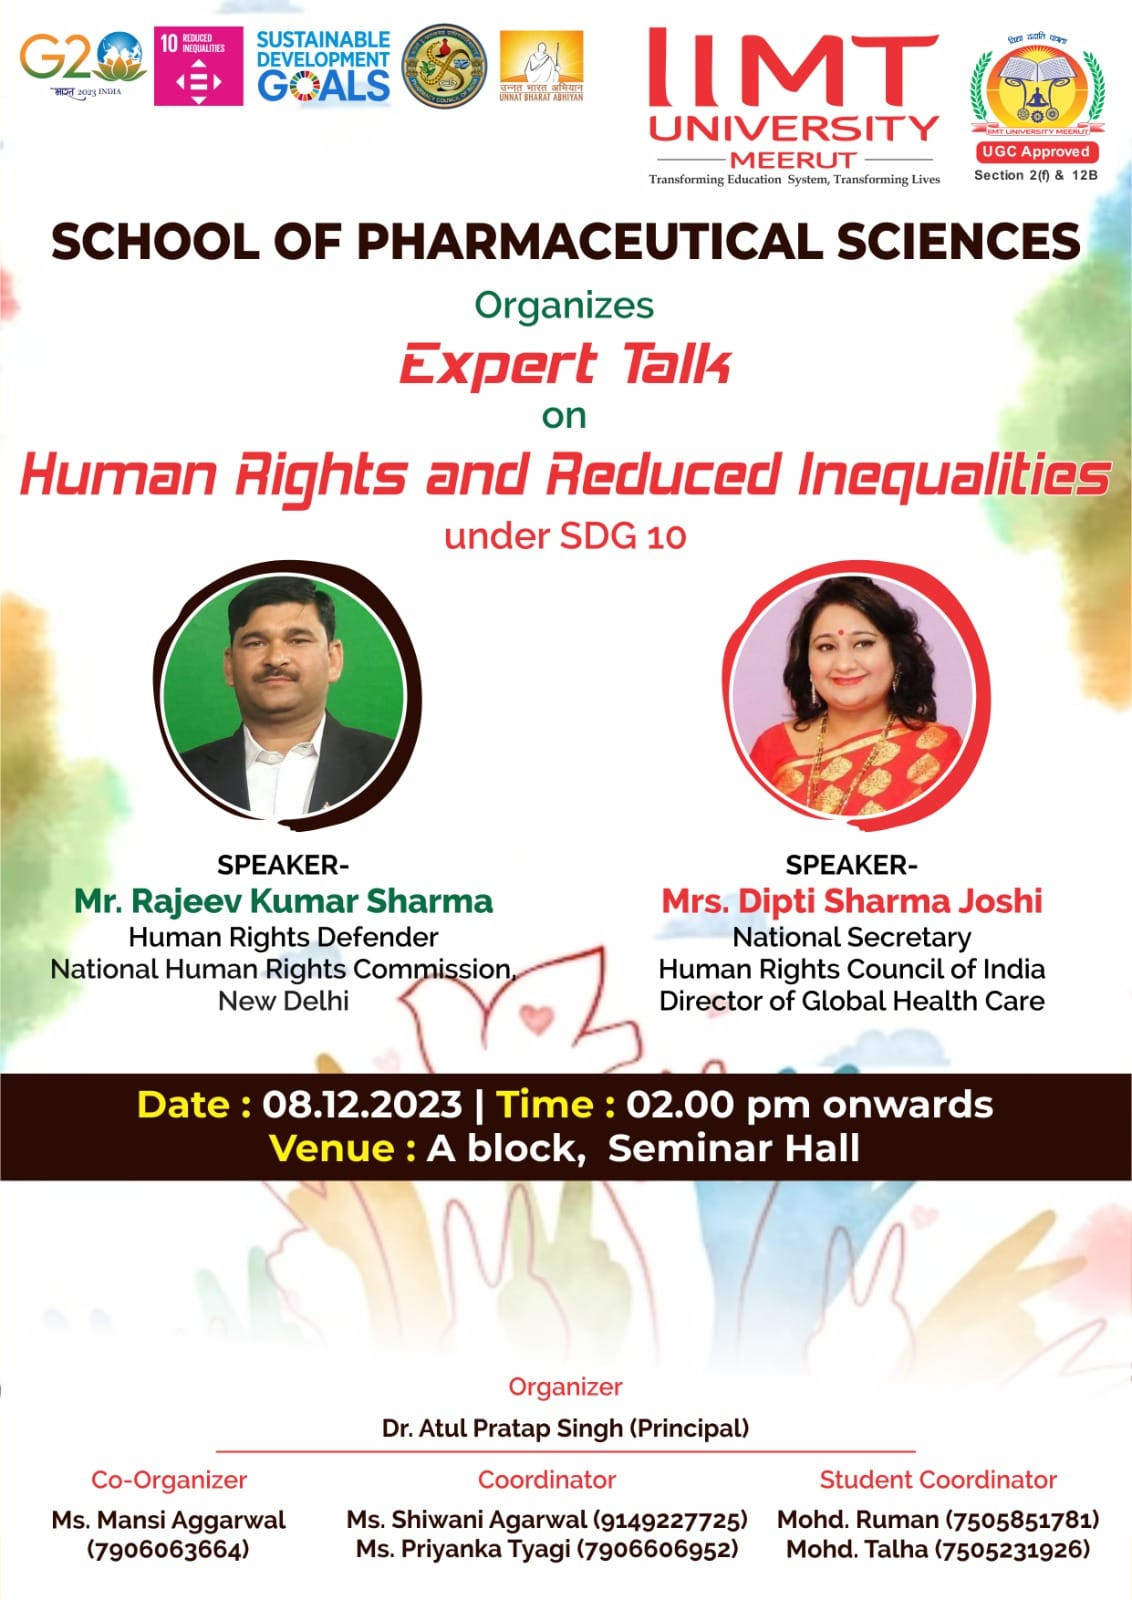 School of Pharmaceutical Sciences (SoPS) at IIMT University, Meerut, organised an Expert Talk on "Human Rights and Reduced Inequalities" under SDG10